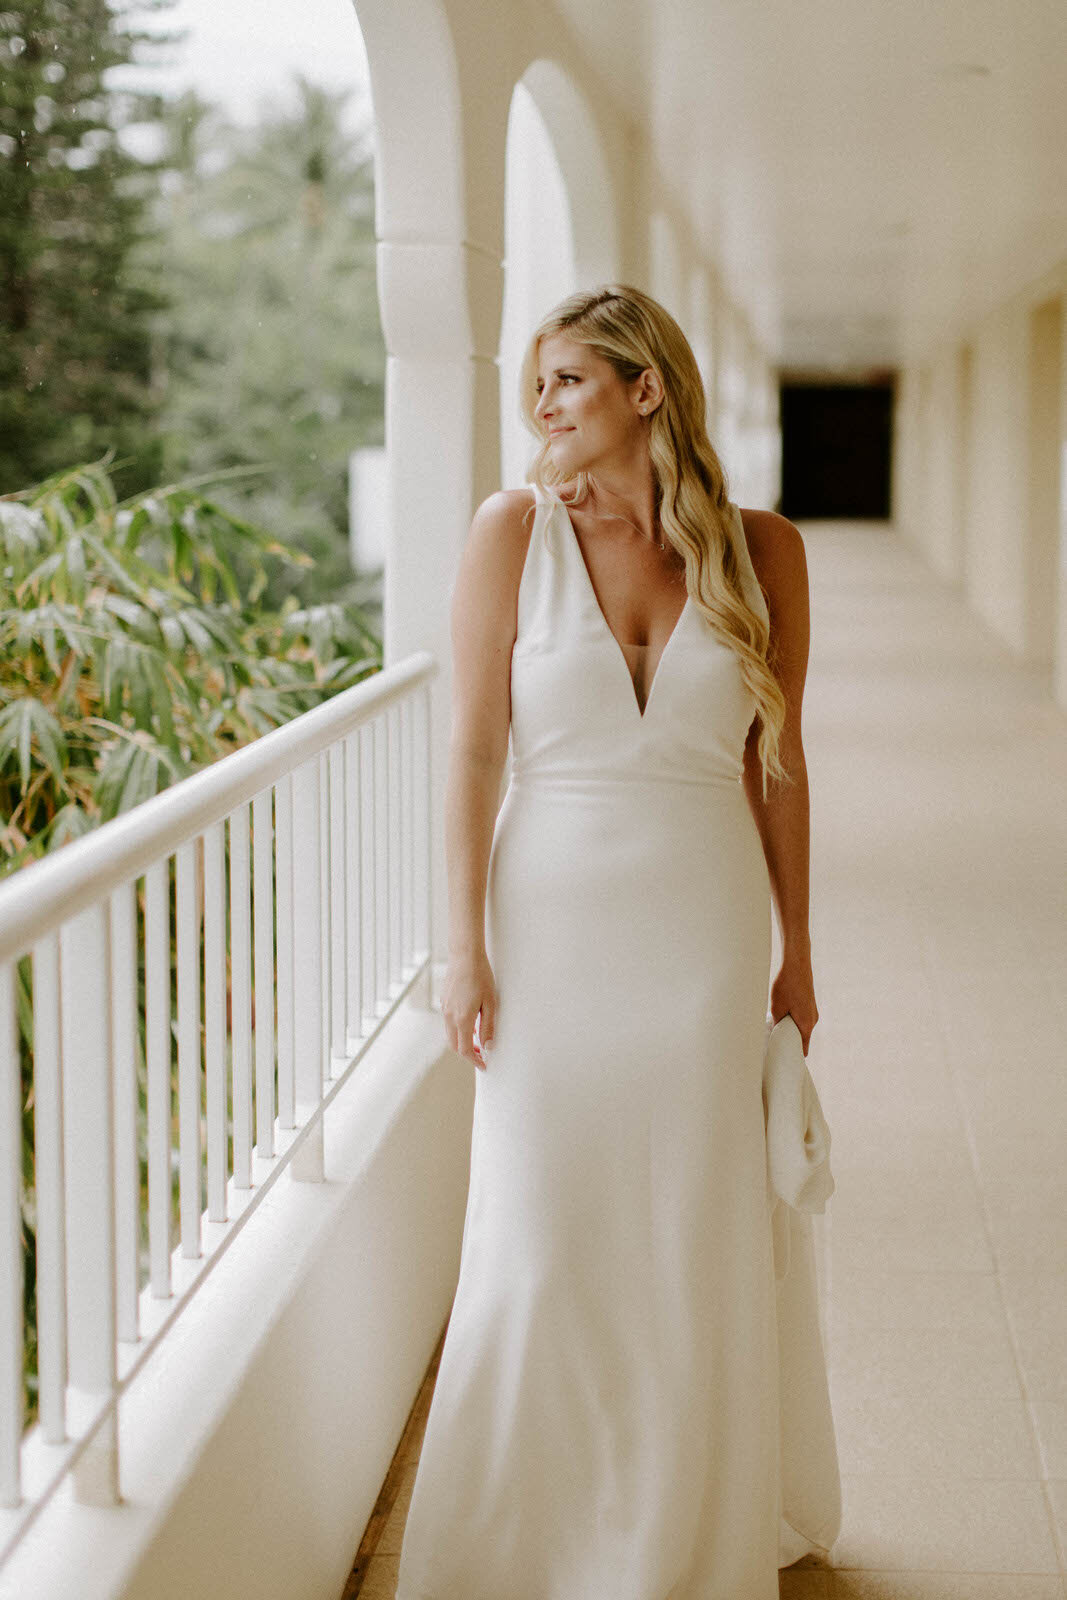 Brianna-Broyles-Photography-Fairmont-Kea-Lani-Wedding-Maui-Photographer-20.jpg